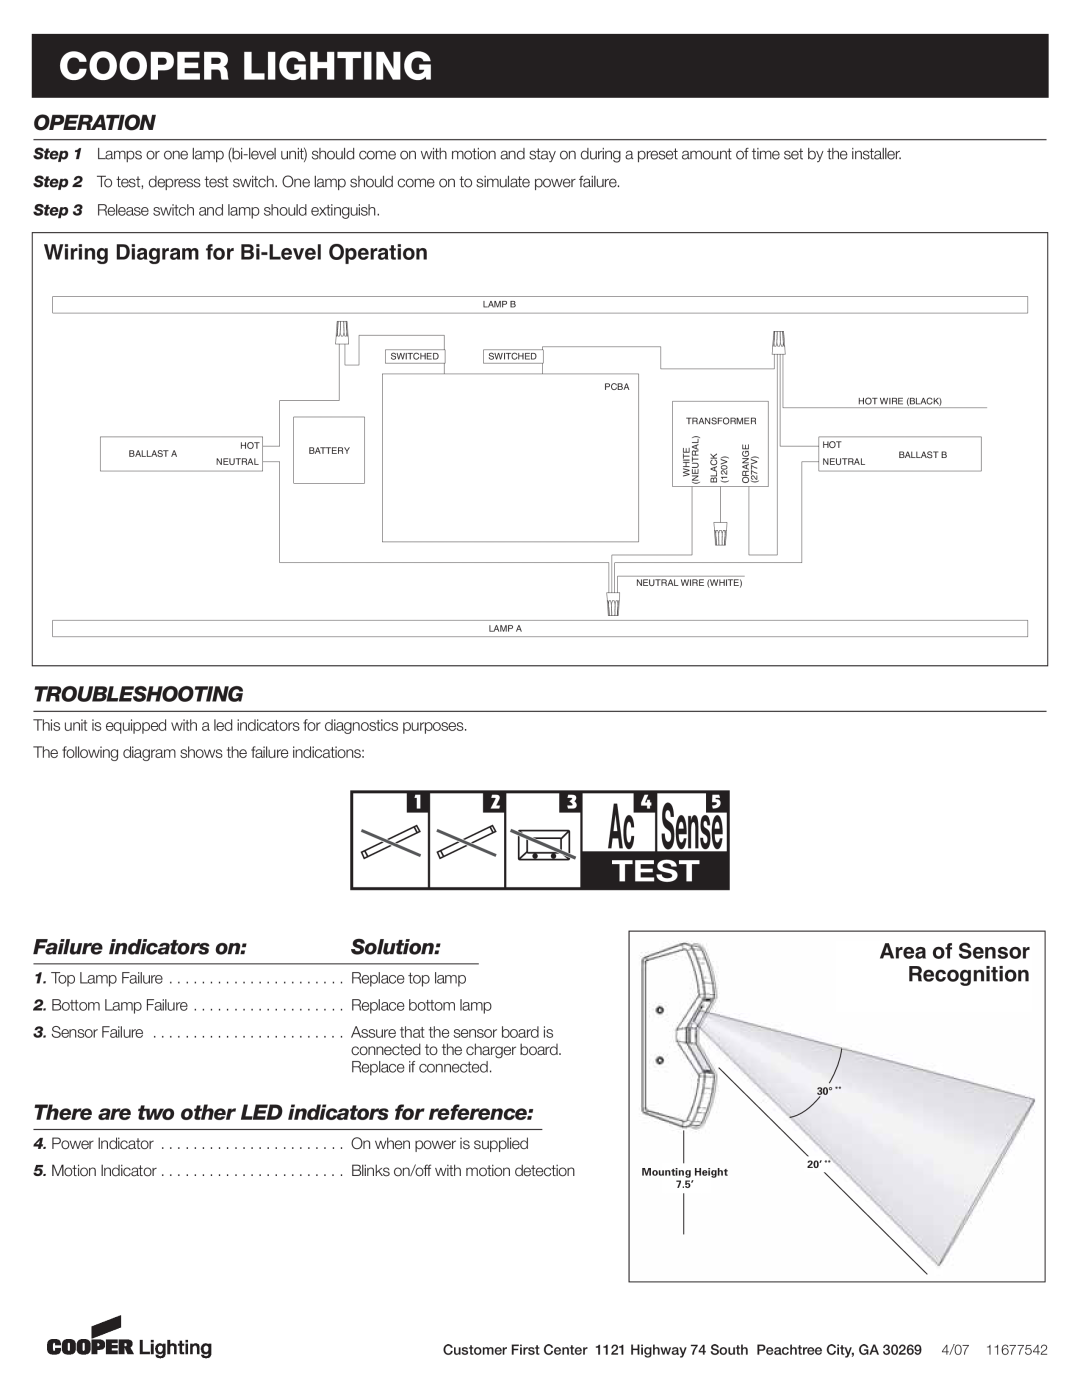 Cooper Lighting StairLite II Wiring Diagram for Bi-LevelOperation, Troubleshooting, Failure indicators on, Ac4 Sense5 